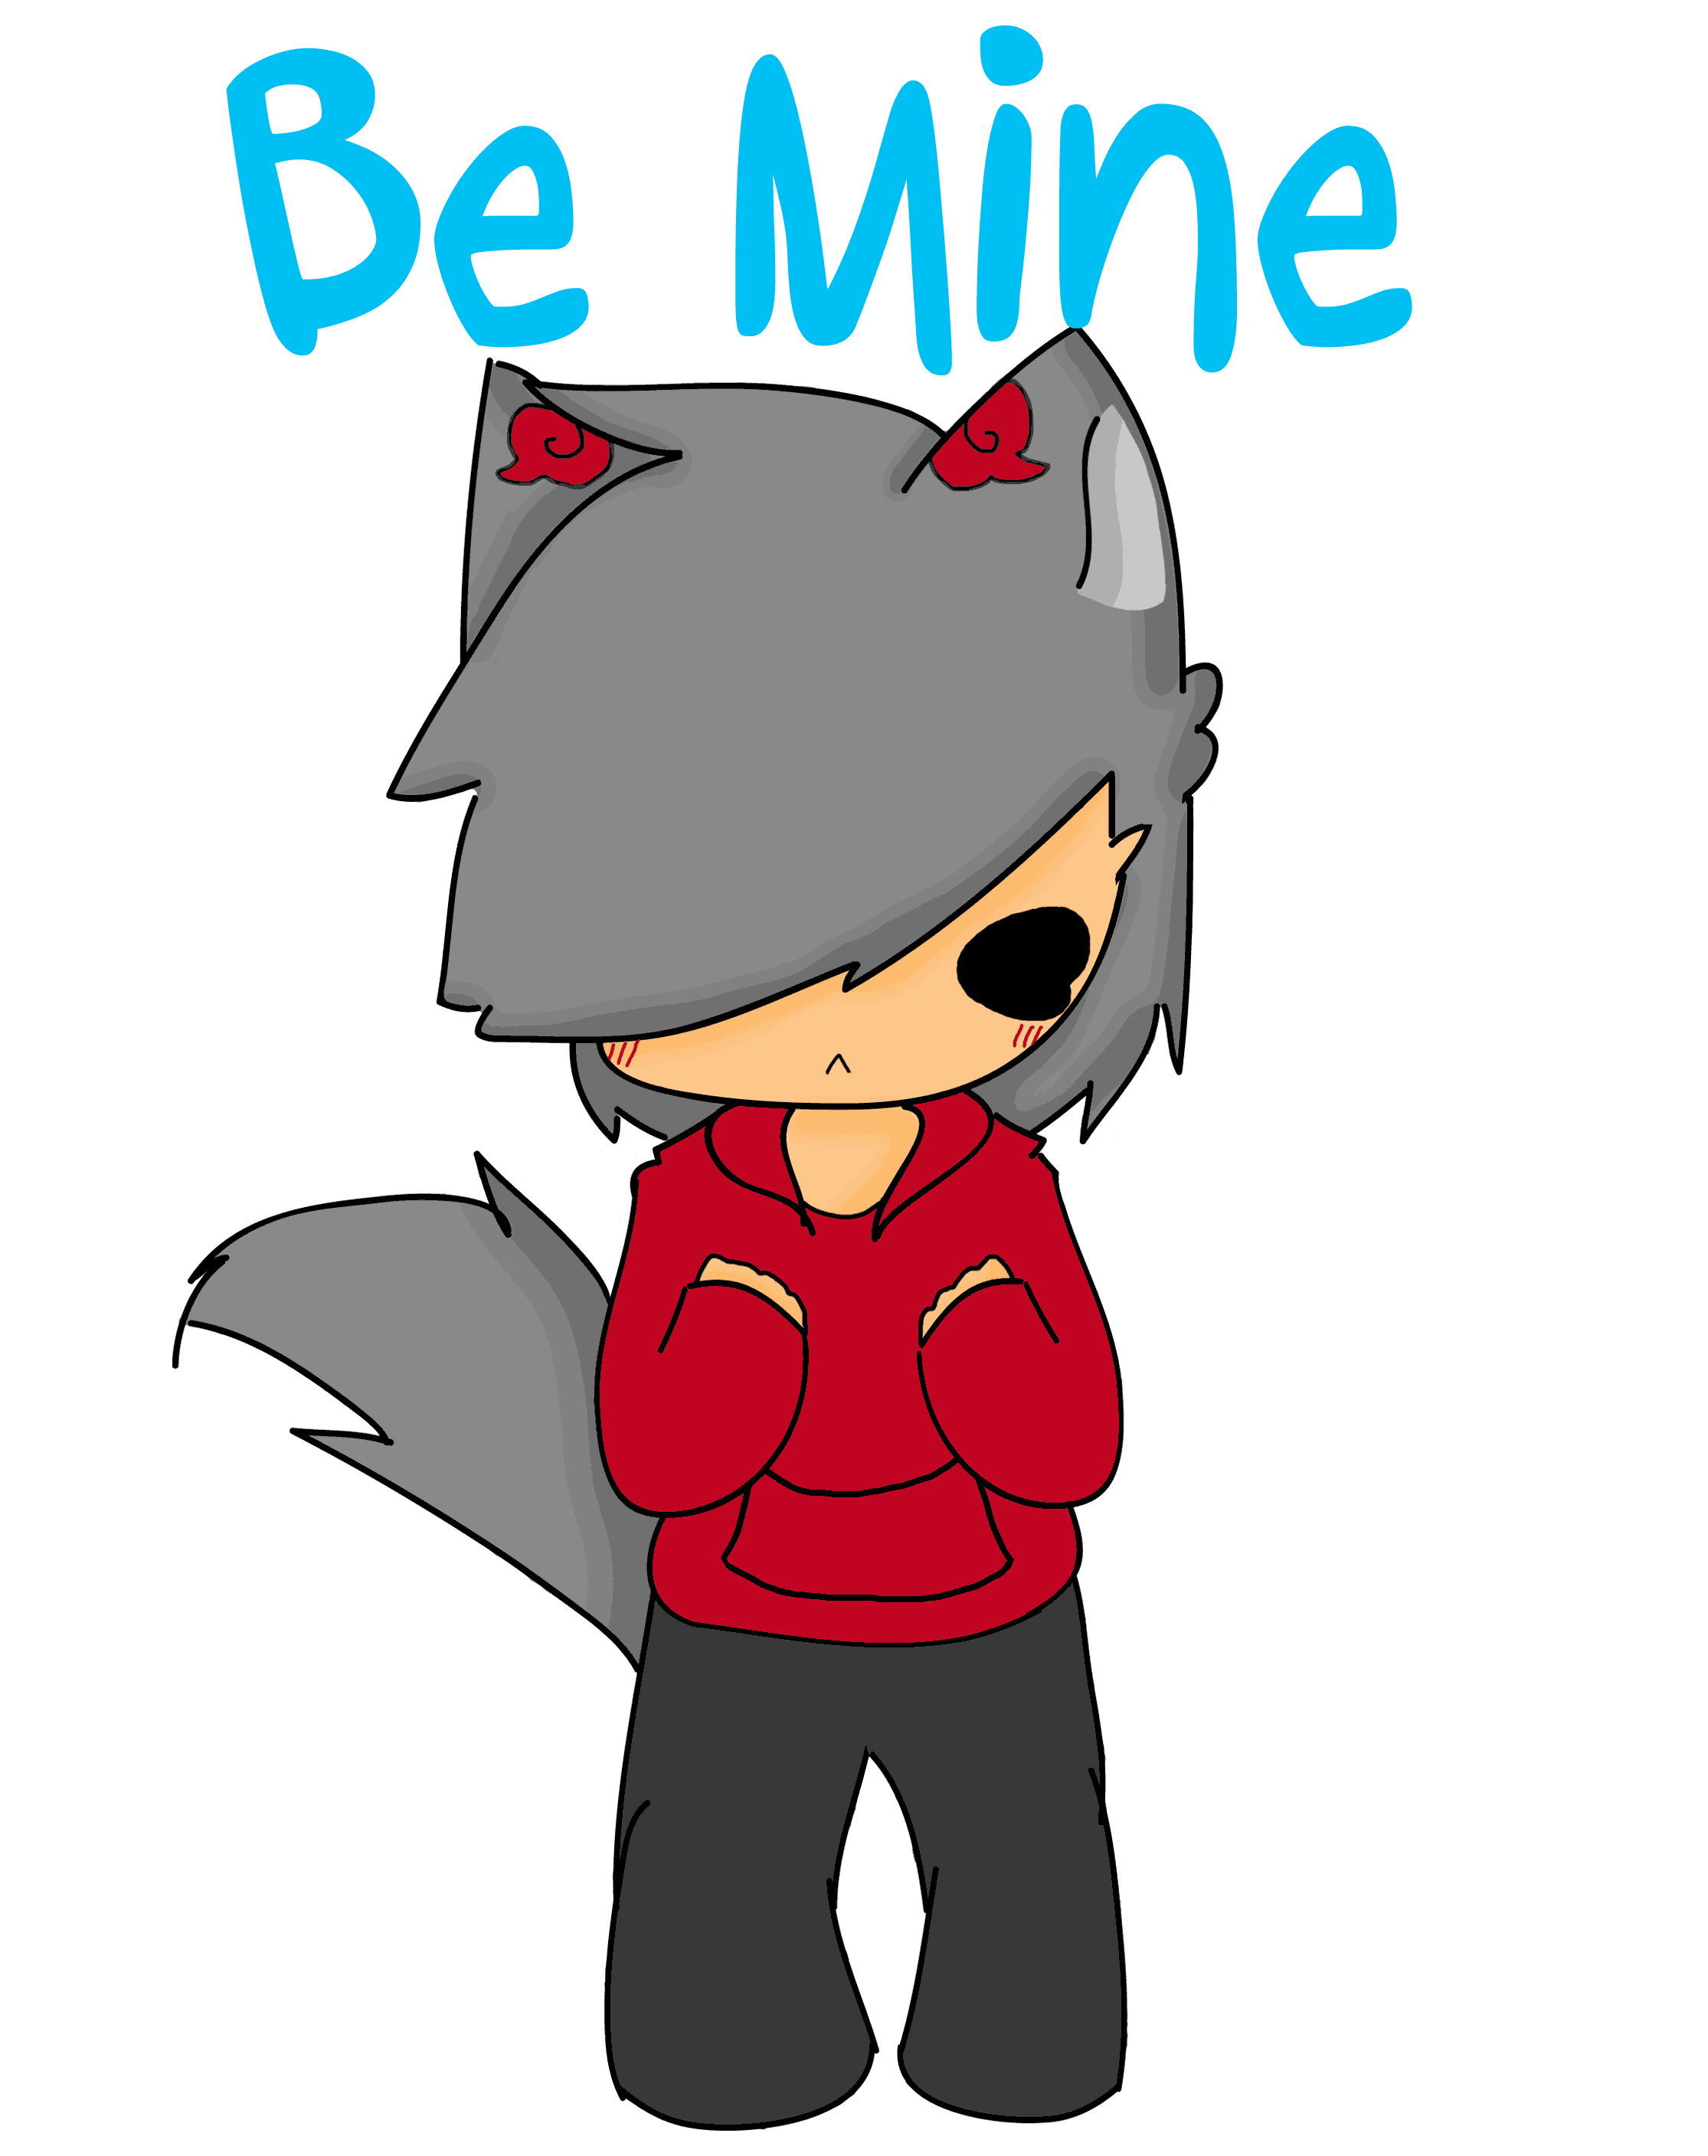 Be Mine - Graphic Image